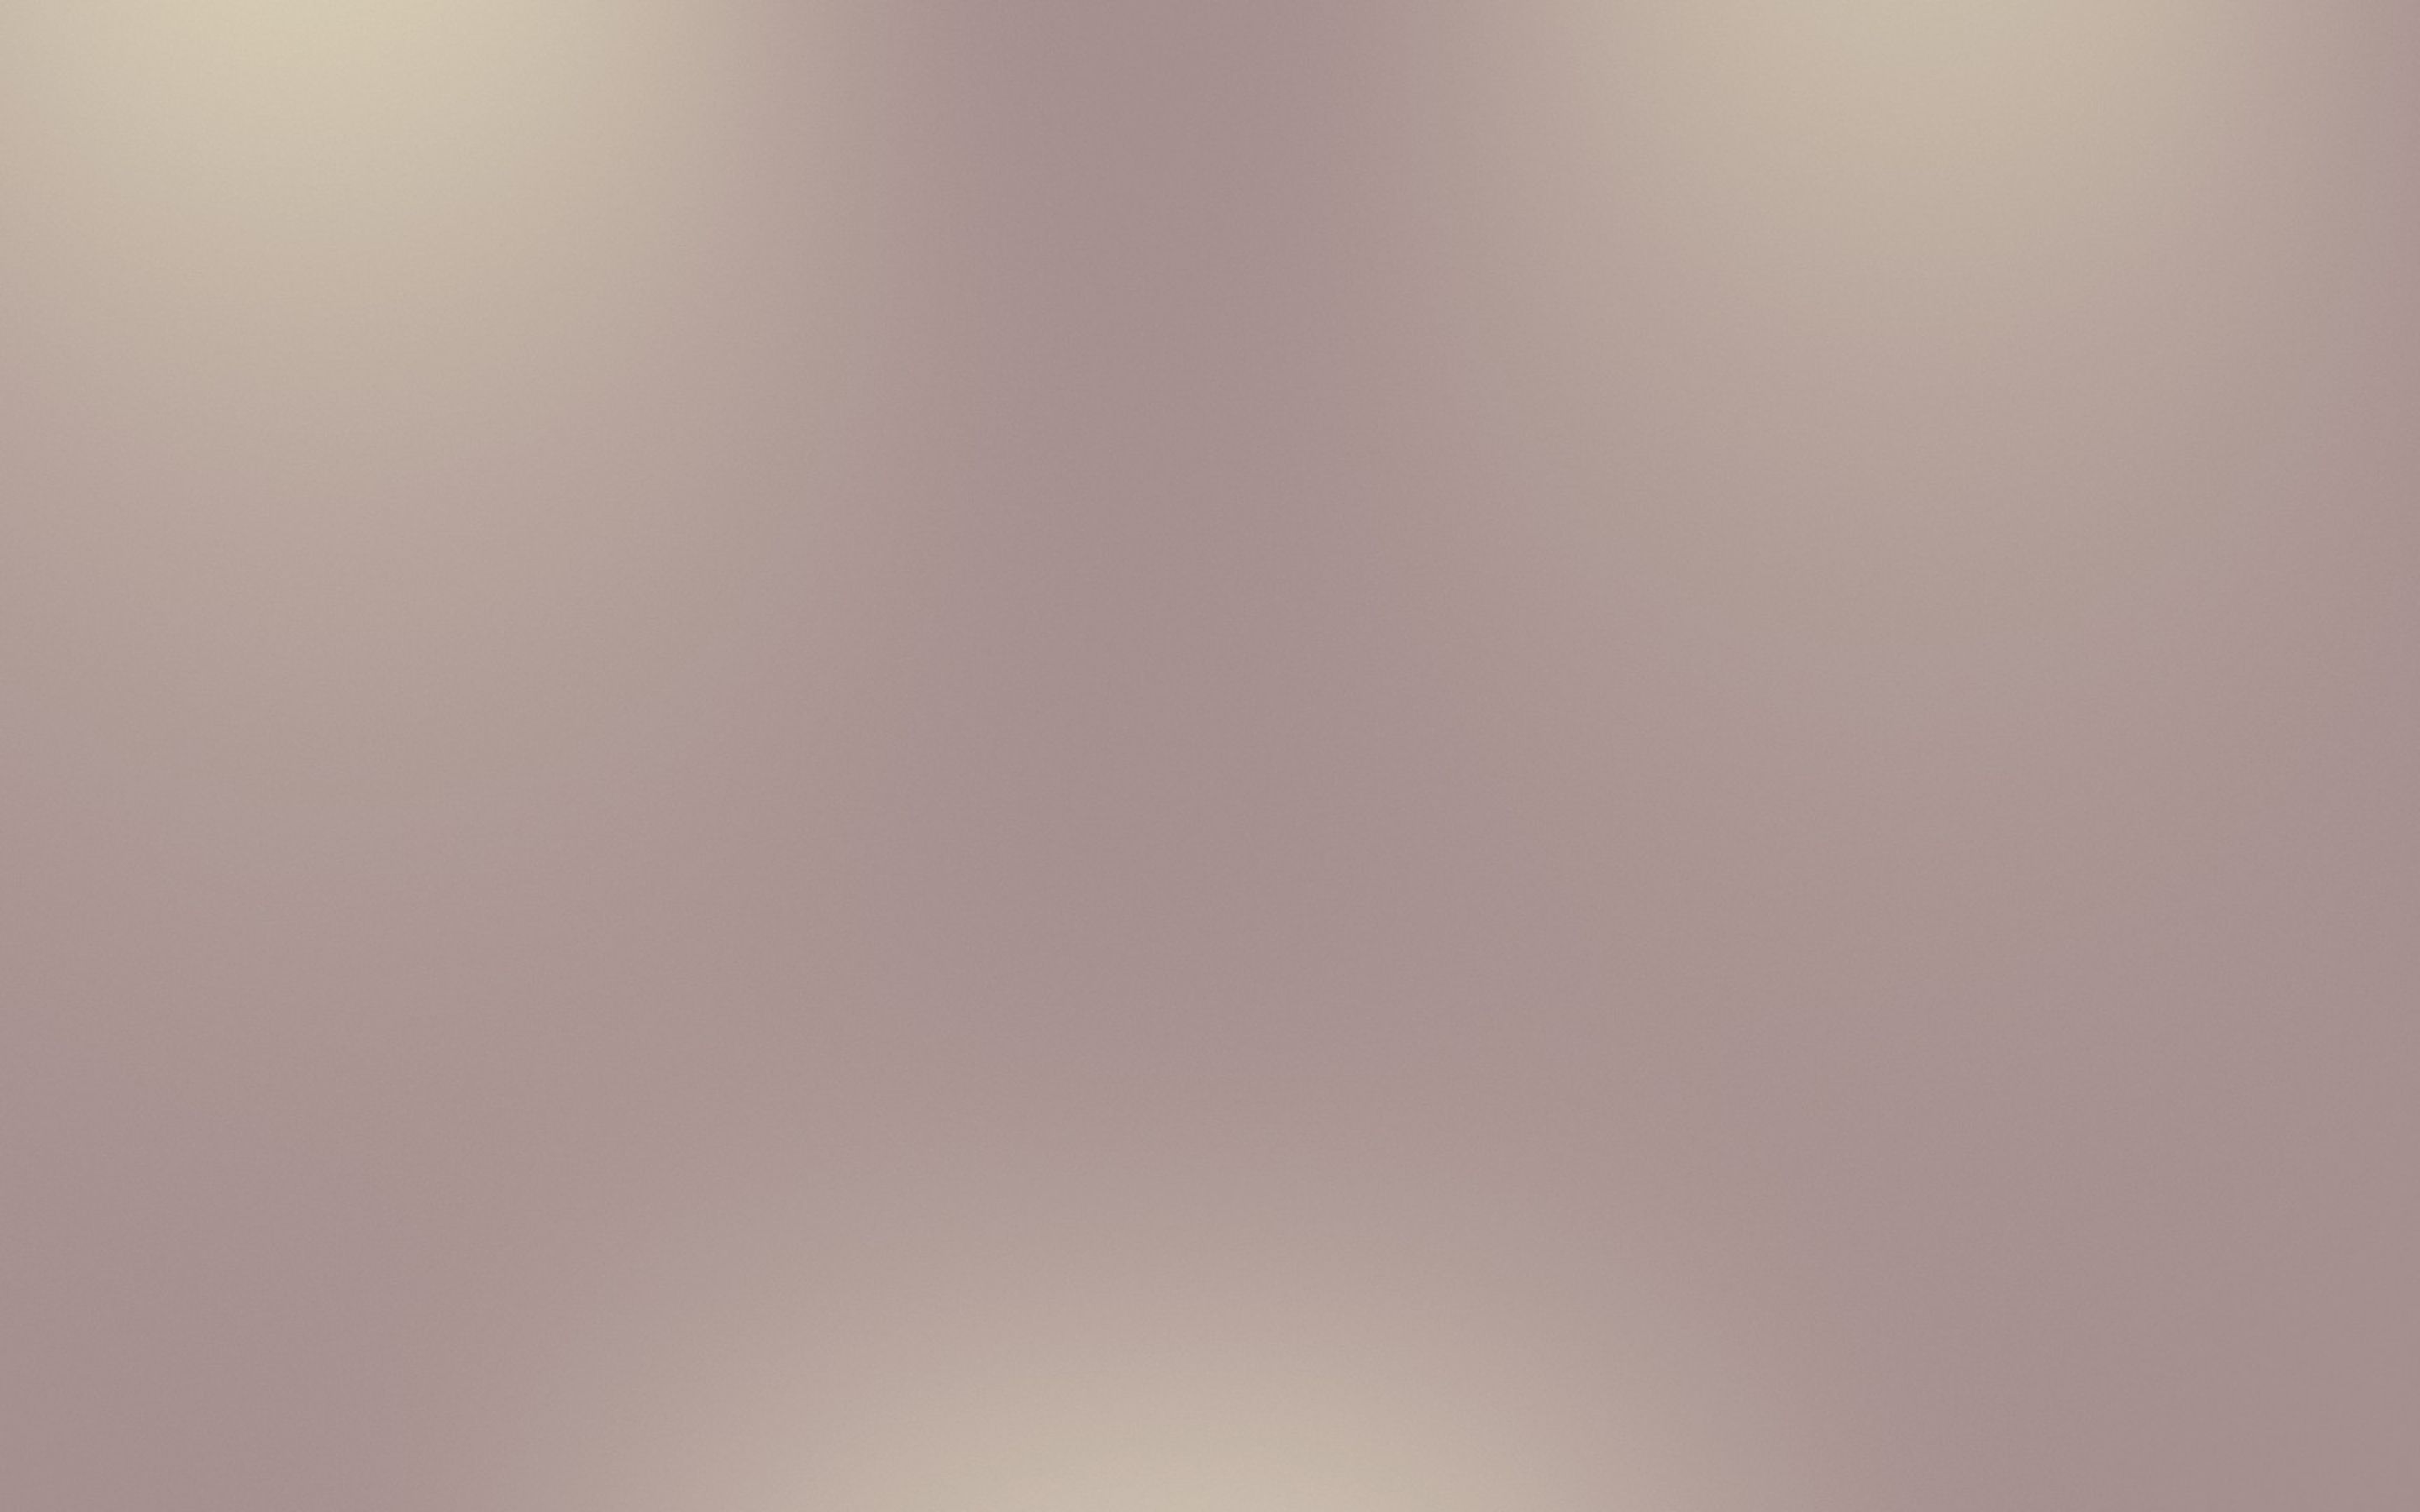 Beige Blur Light Macbook Pro Retina HD 4k Wallpaper, Image, Background, Photo and Picture